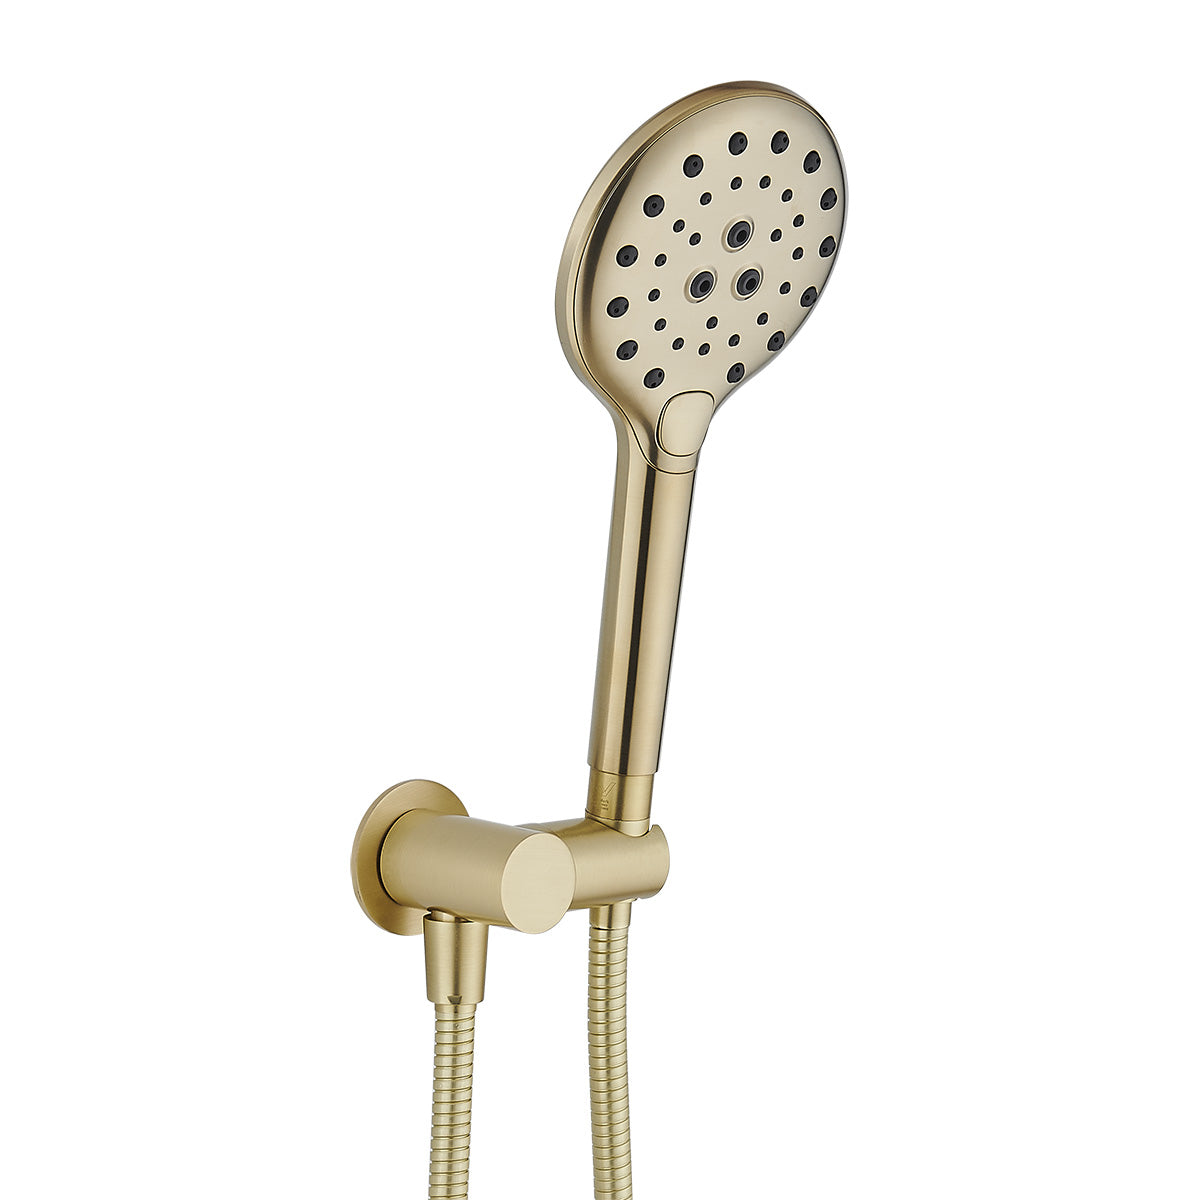 IDHS1 (BG) / Ideal Hand Shower (Brushed Gold) - Hellycar Brushed Gold Handheld Shower Set